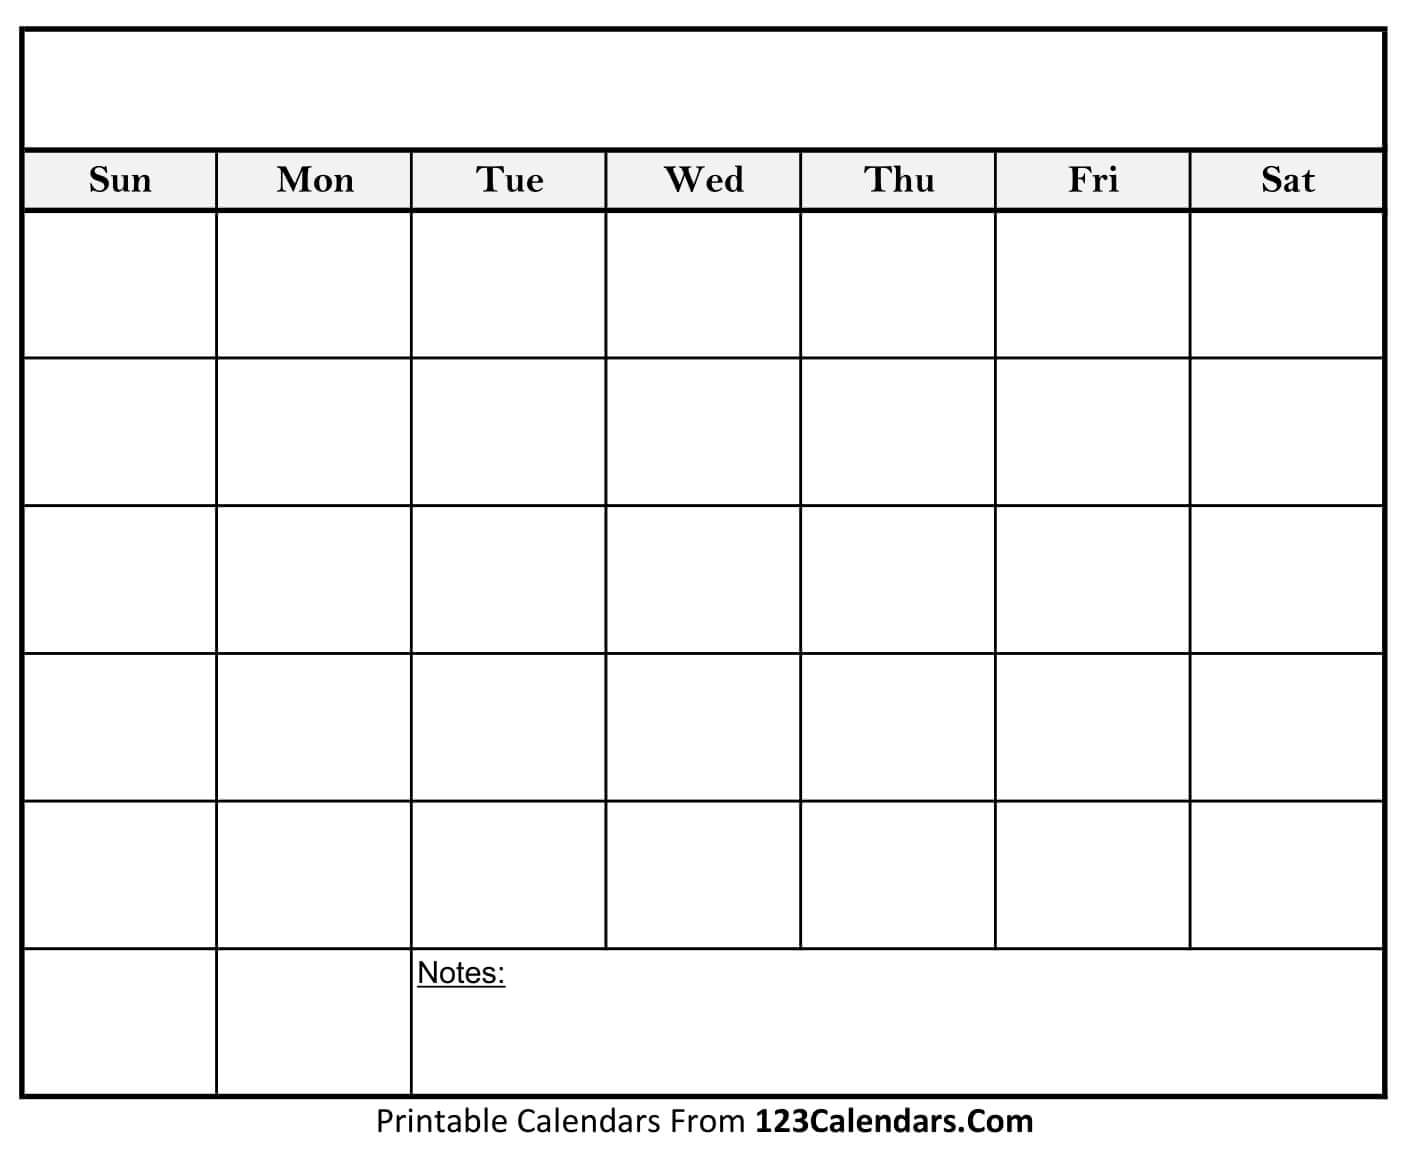 Printable Blank Calendar Templates - 123Calendars inside Blank Calendar To Fill In